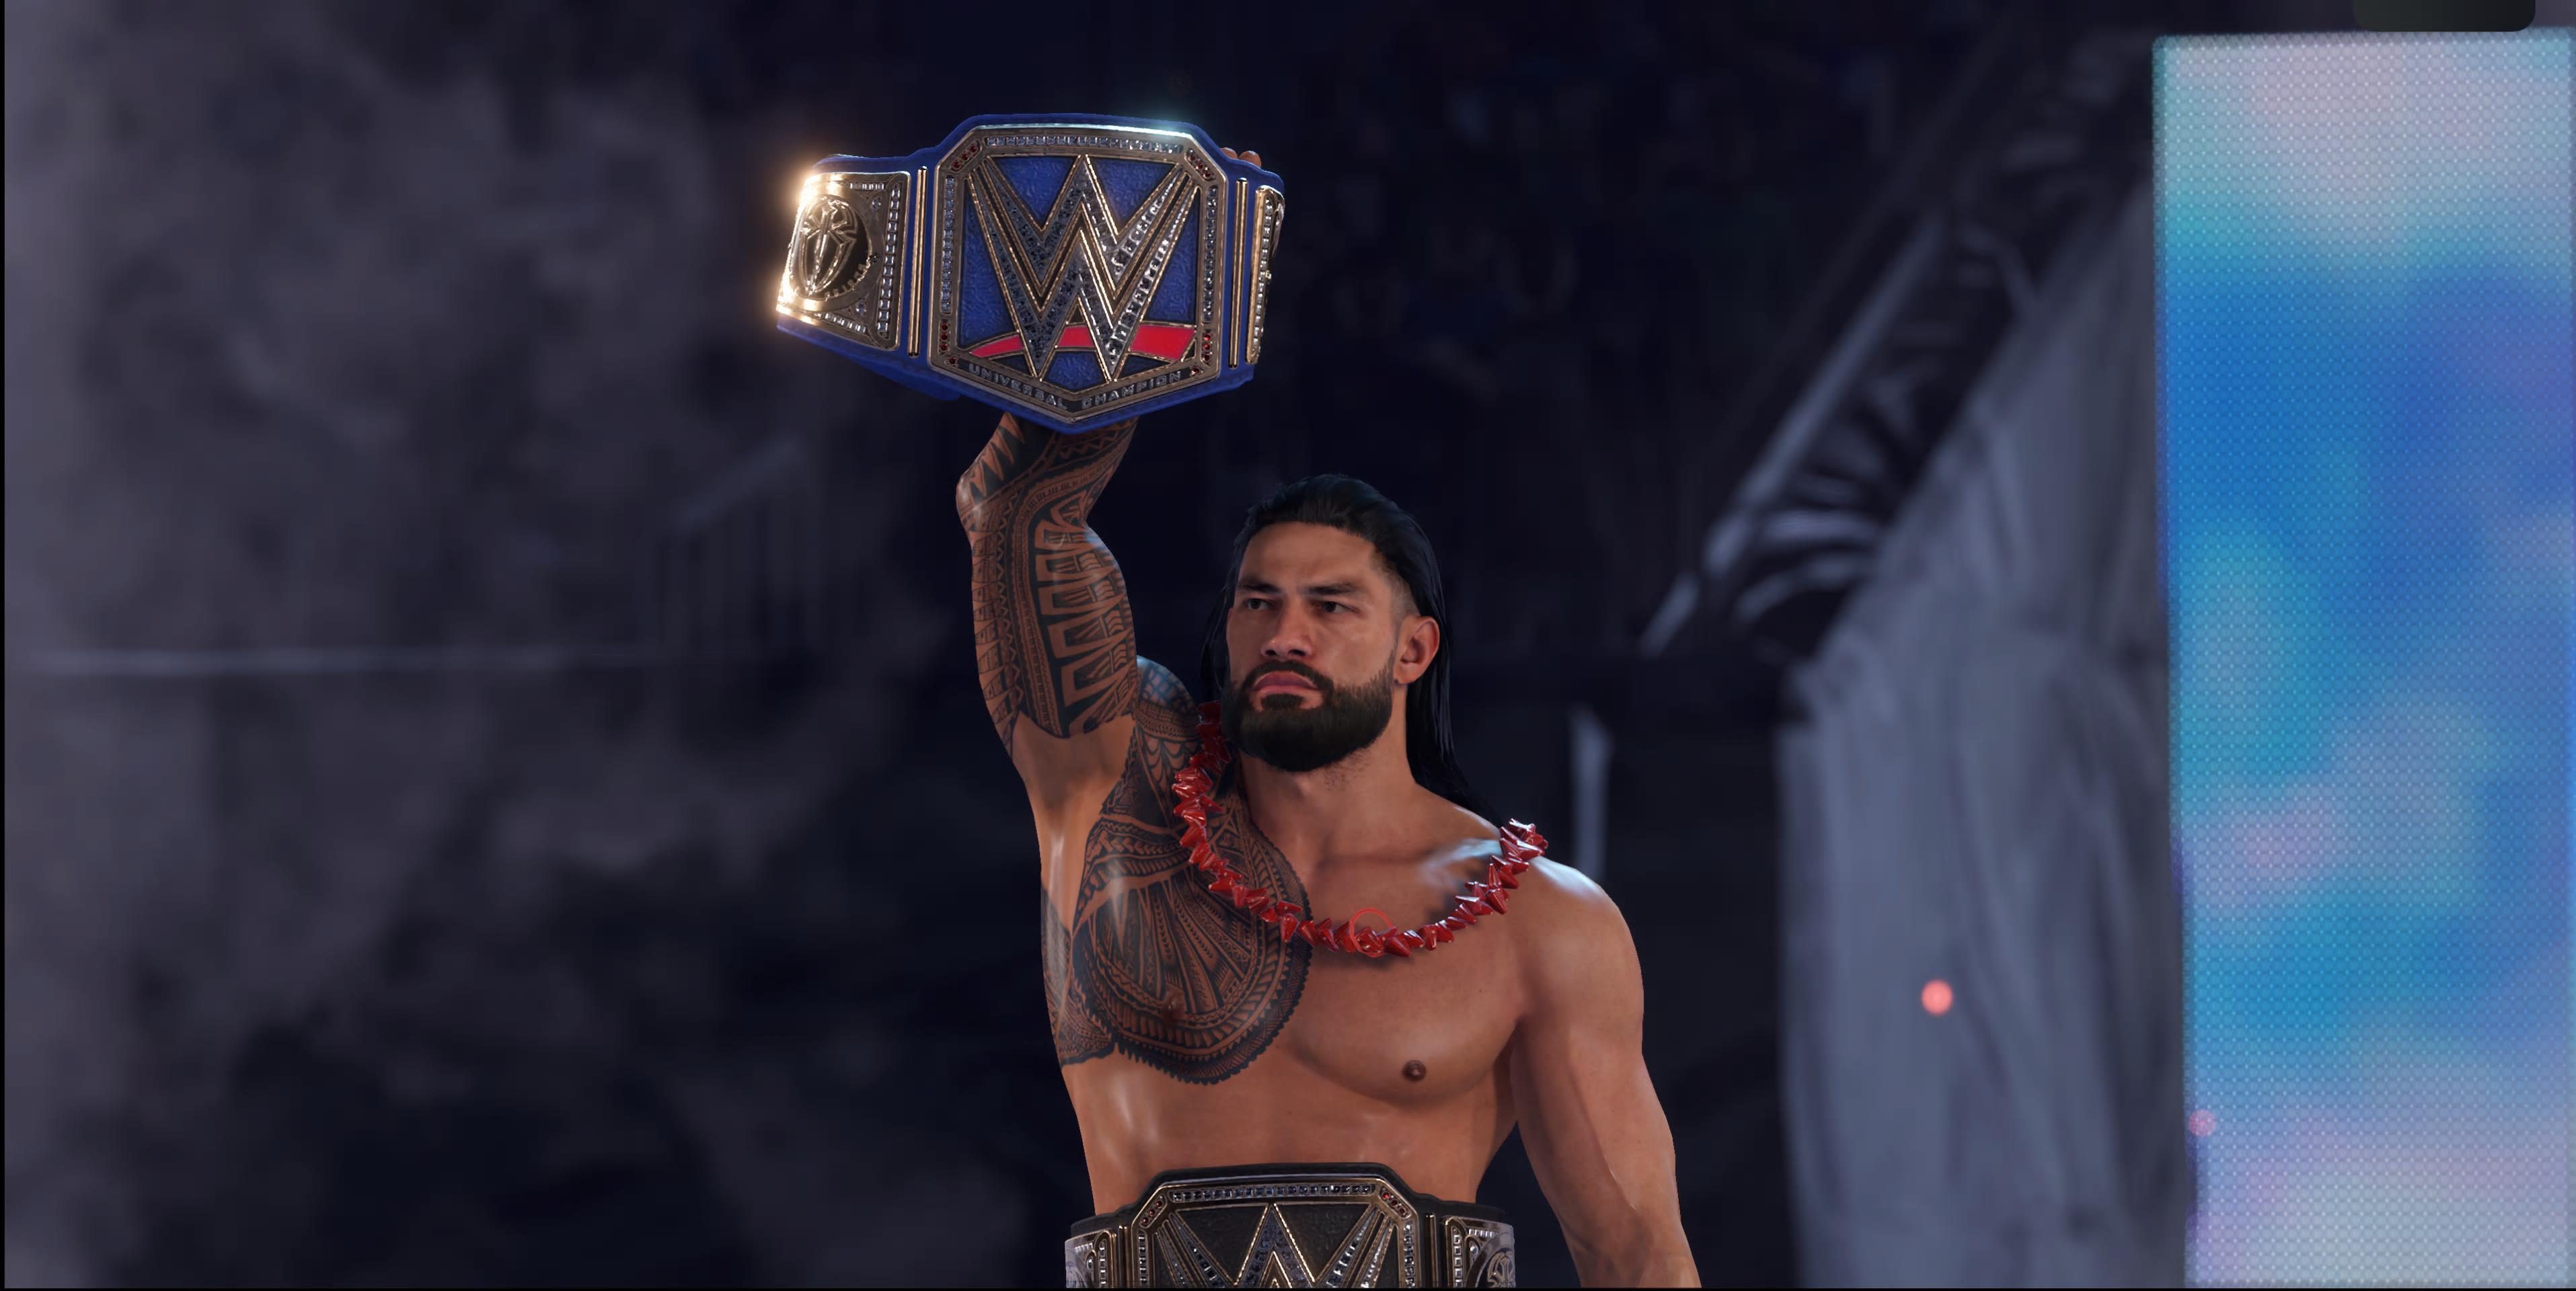 WWE 2K22 - Roman Reigns & Brock Lesnar Mods! (PC Mods) 